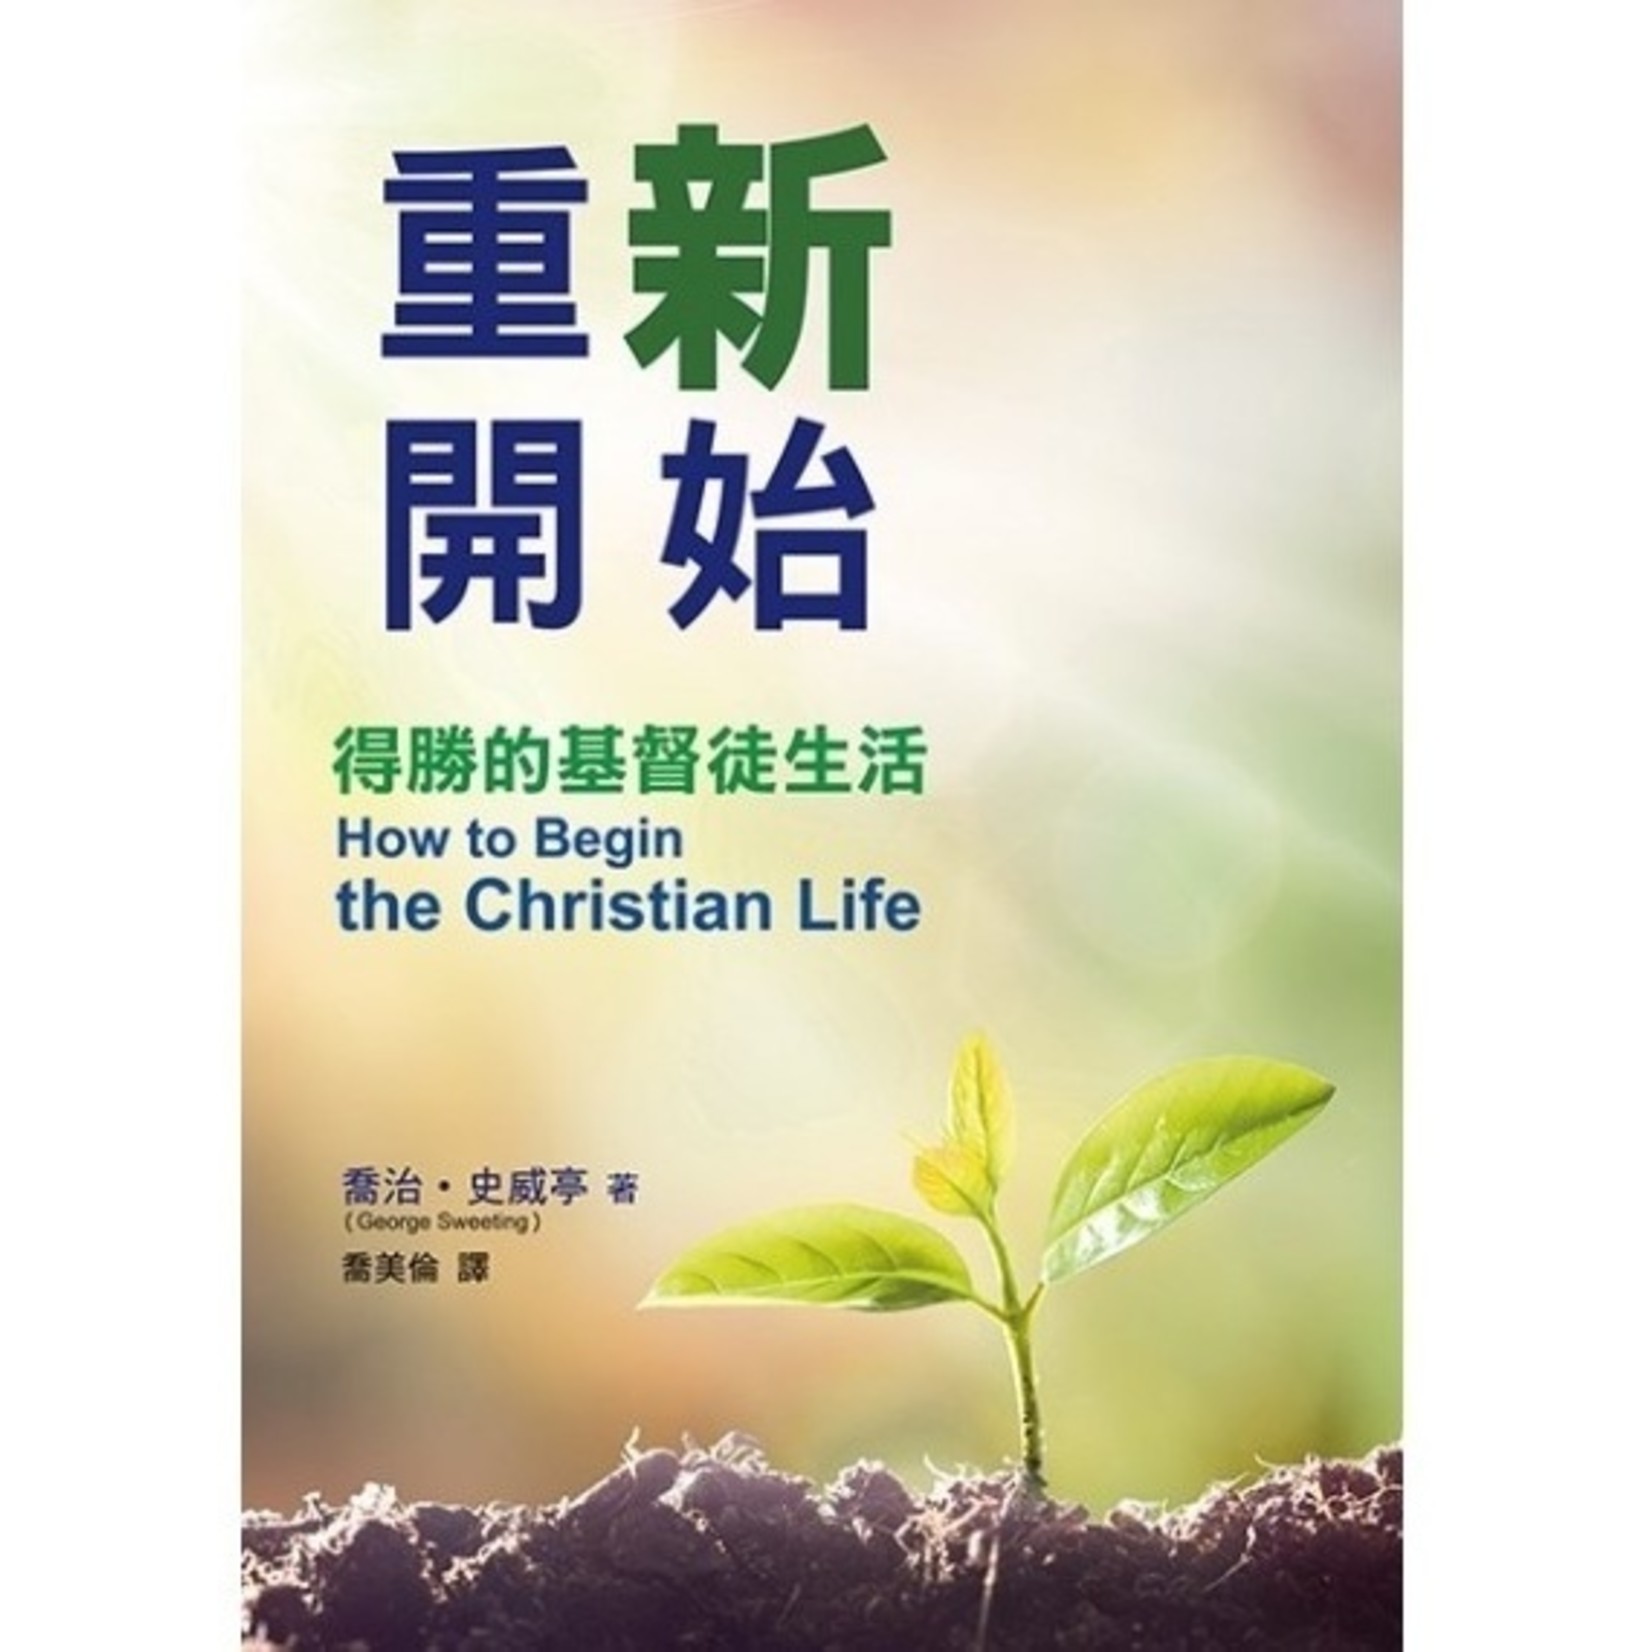 中國主日學協會 China Sunday School Association 重新開始：得勝的基督生活 How to Begin the Christian Life